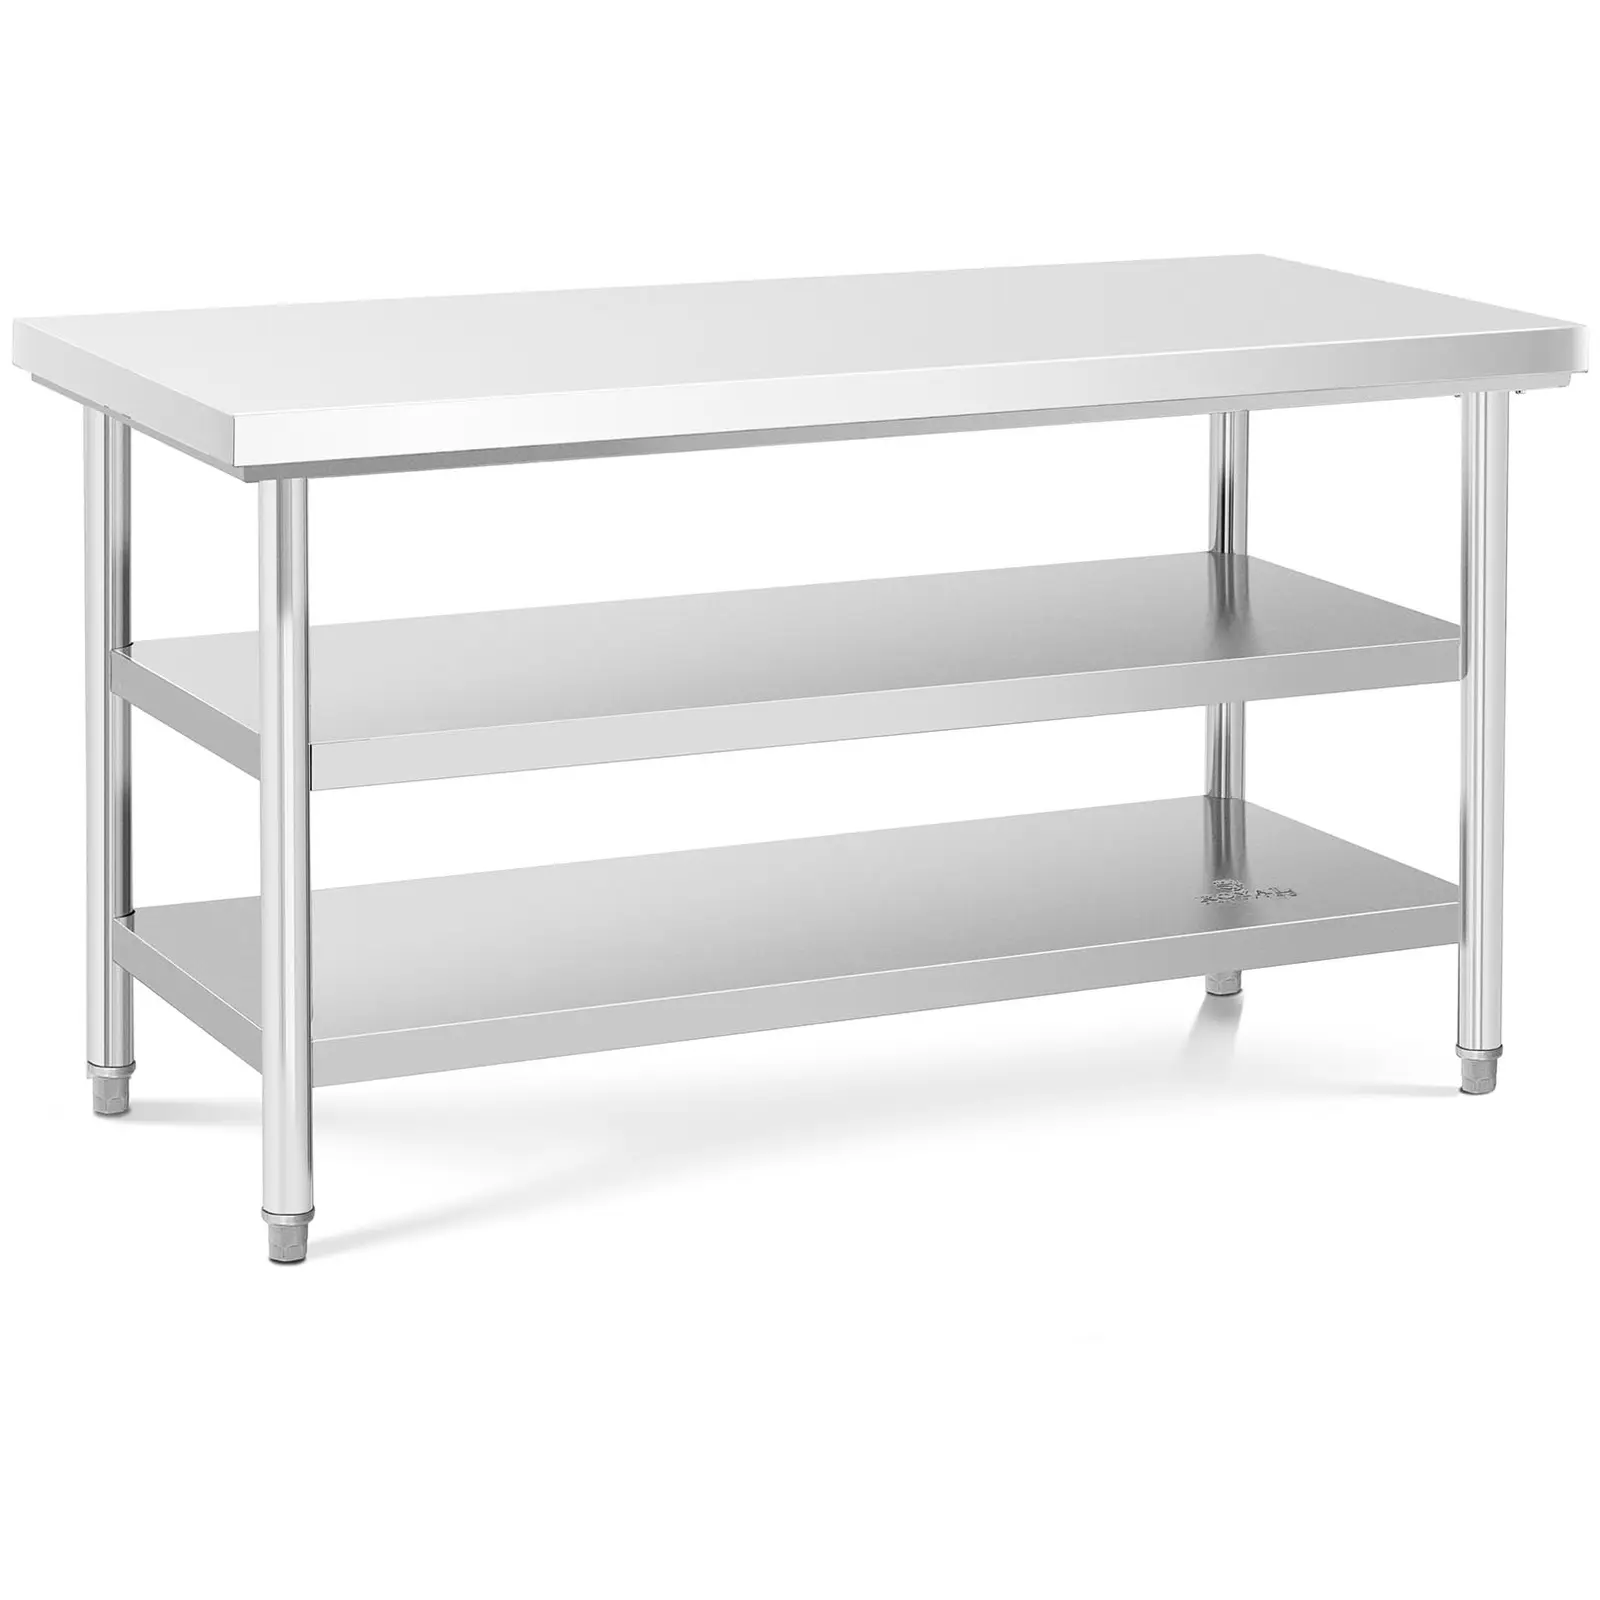 Radni stol od nehrđajućeg čelika - 150 x 70 cm - 600 kg - 3 razine